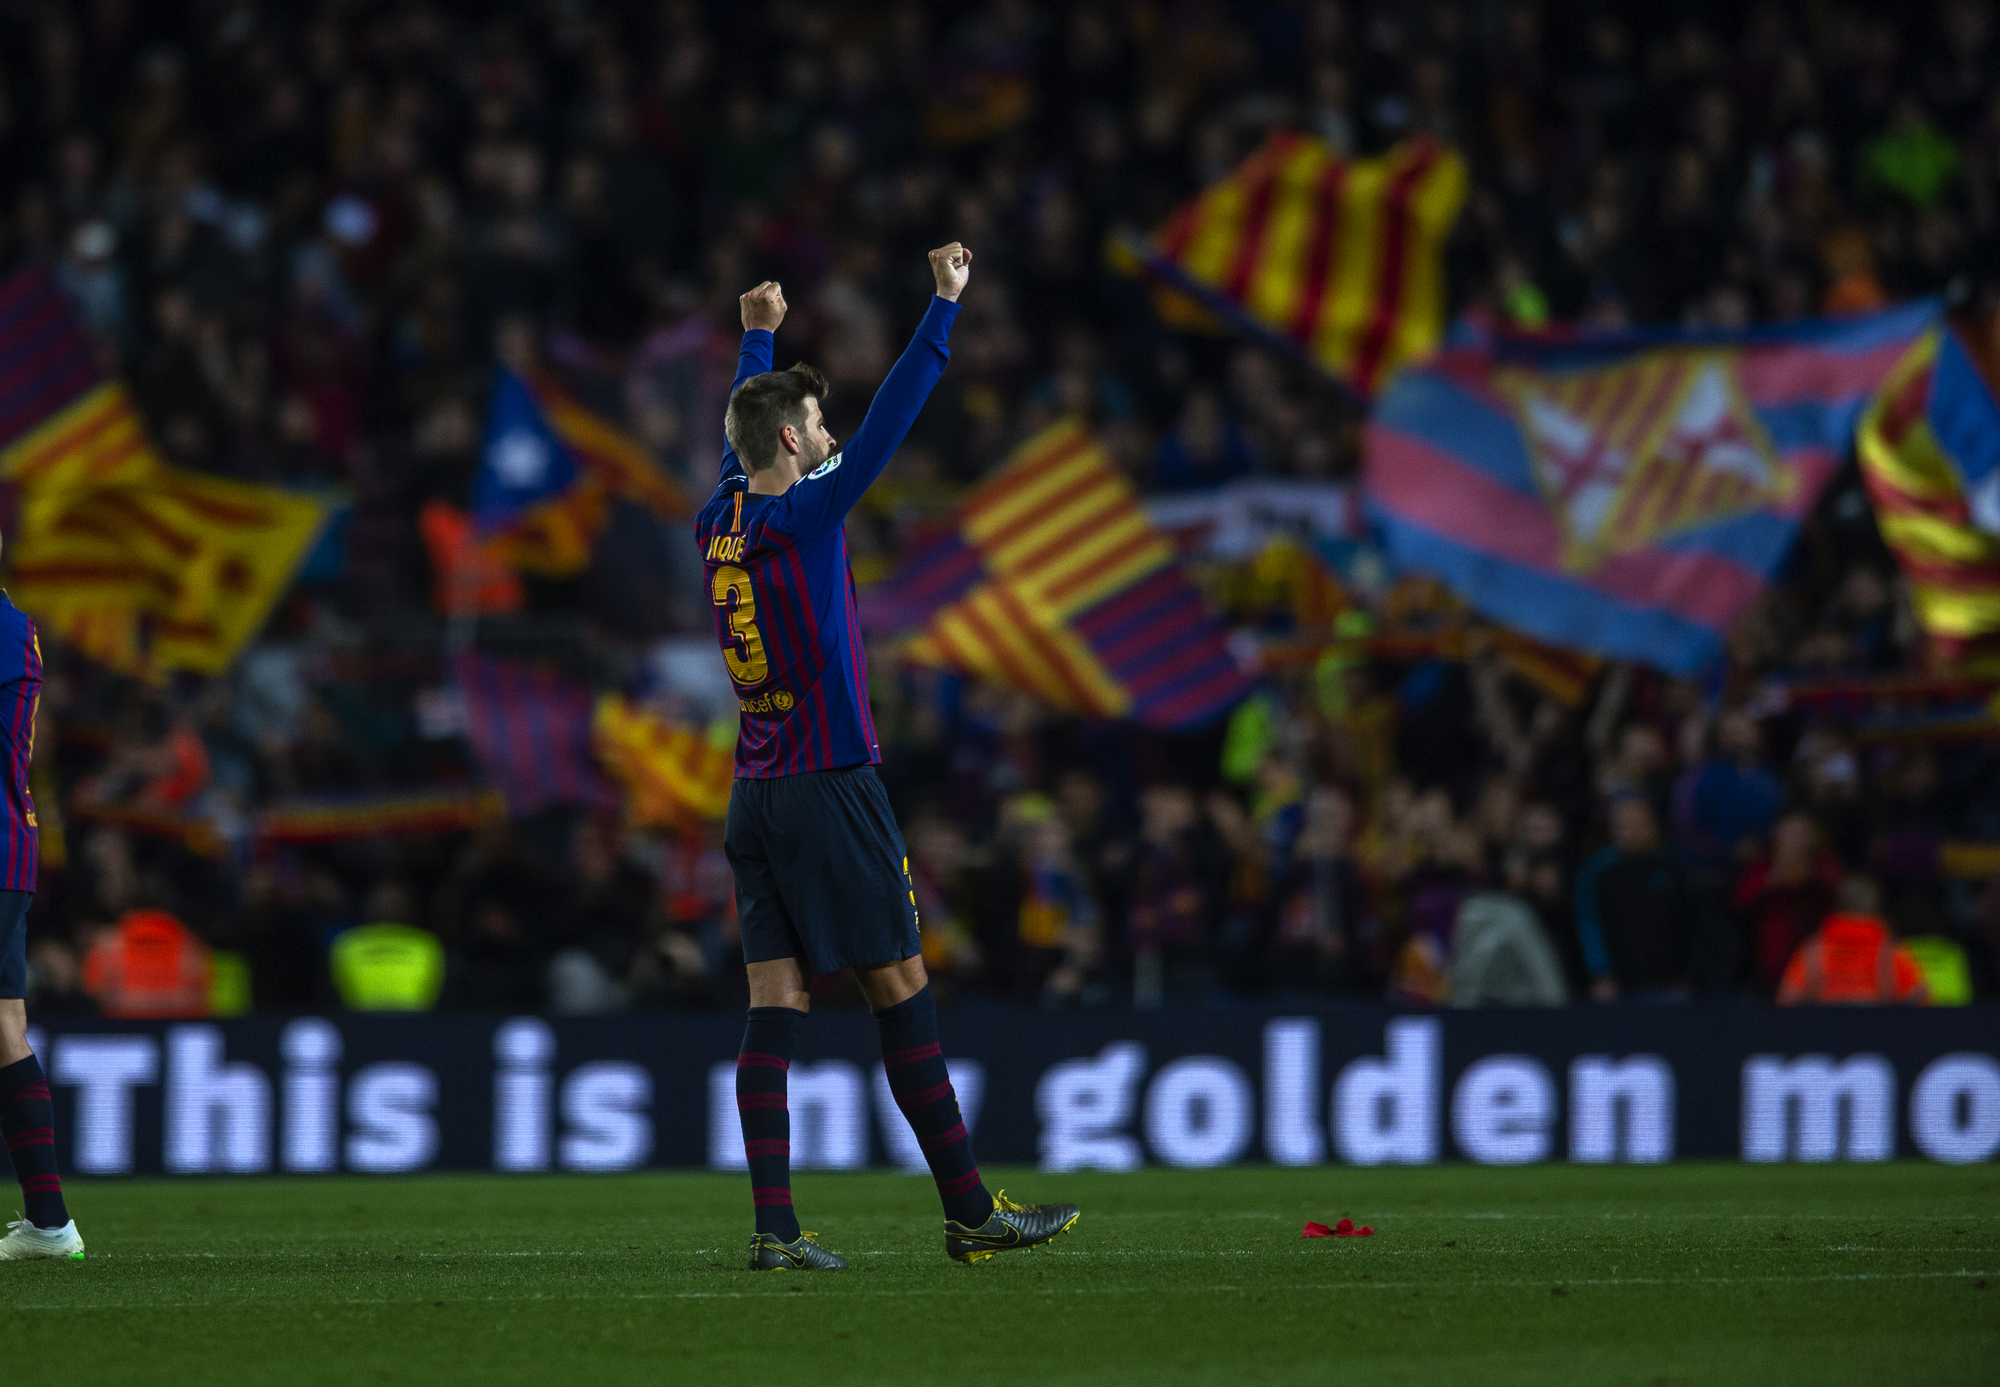 Salta la sorpresa: Piqué se retira del fútbol profesional